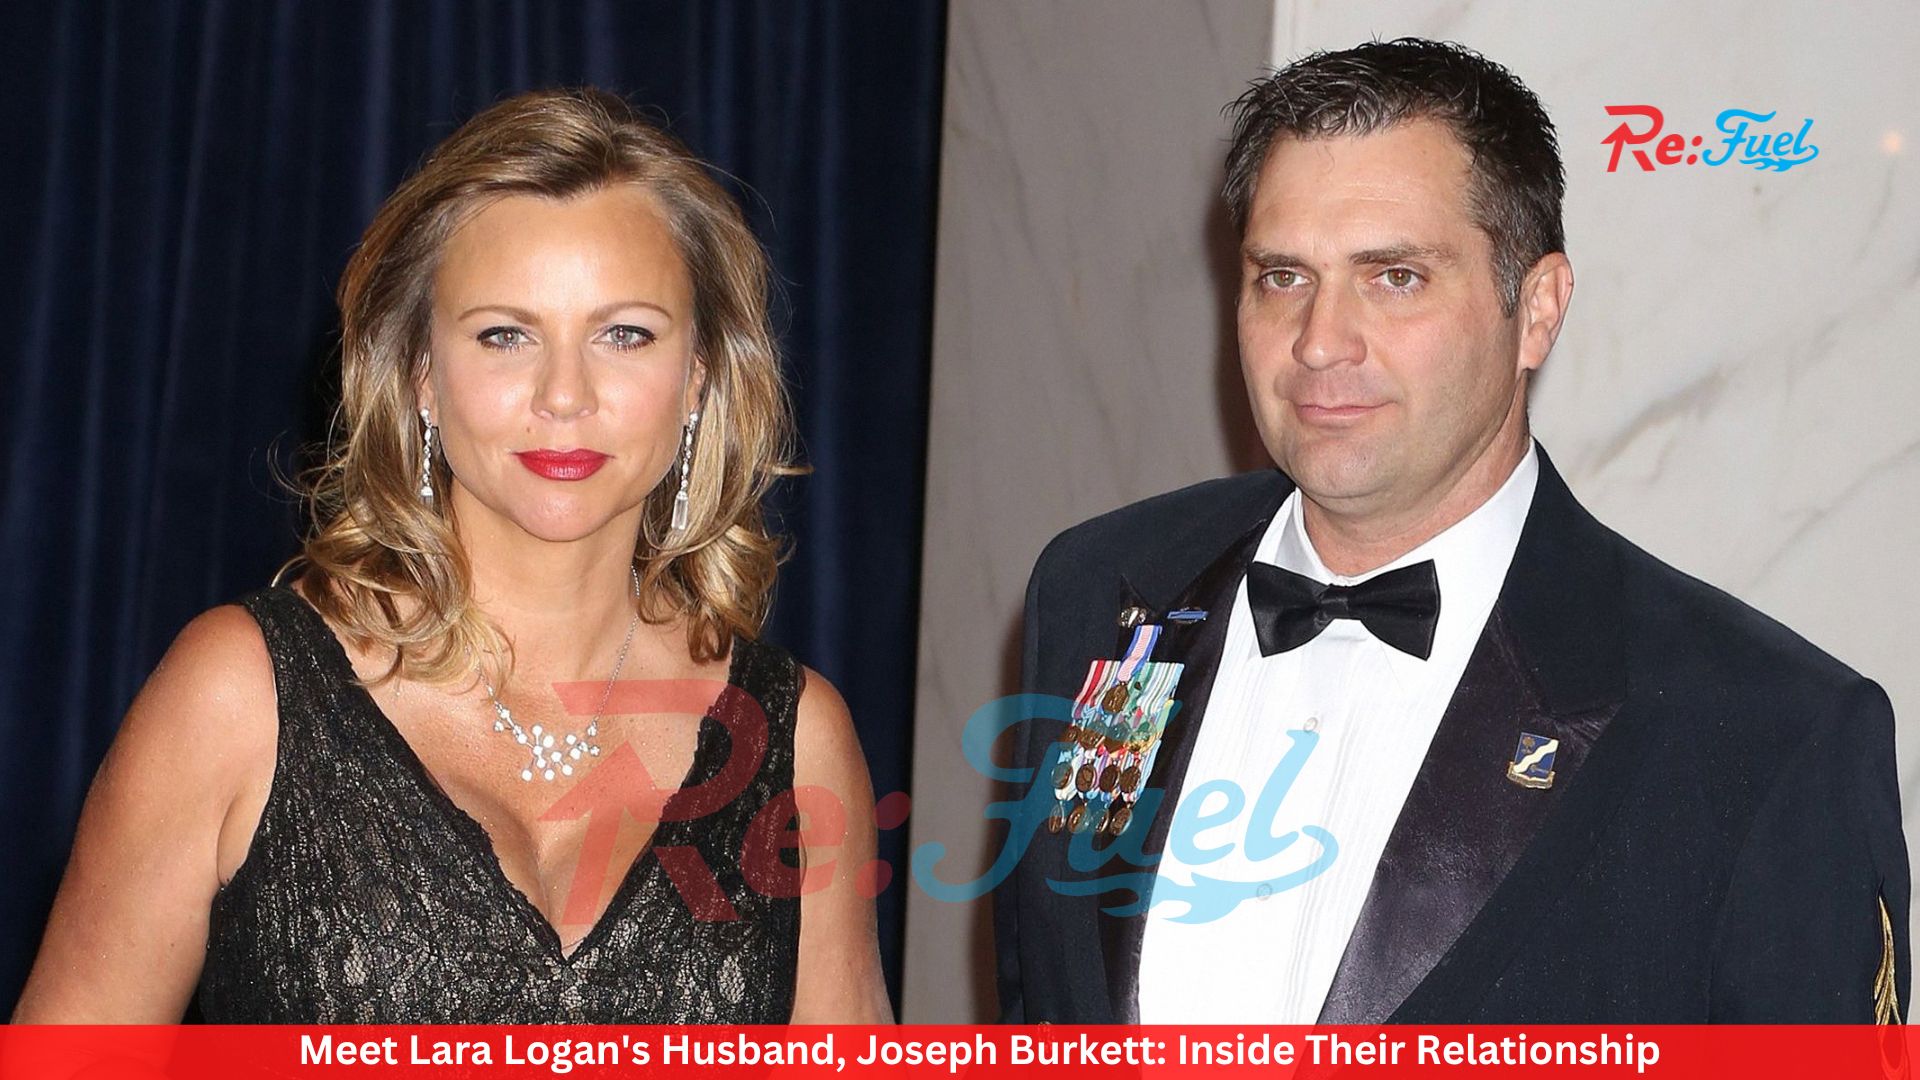 Meet Lara Logan's Husband, Joseph Burkett: Inside Their Relationship